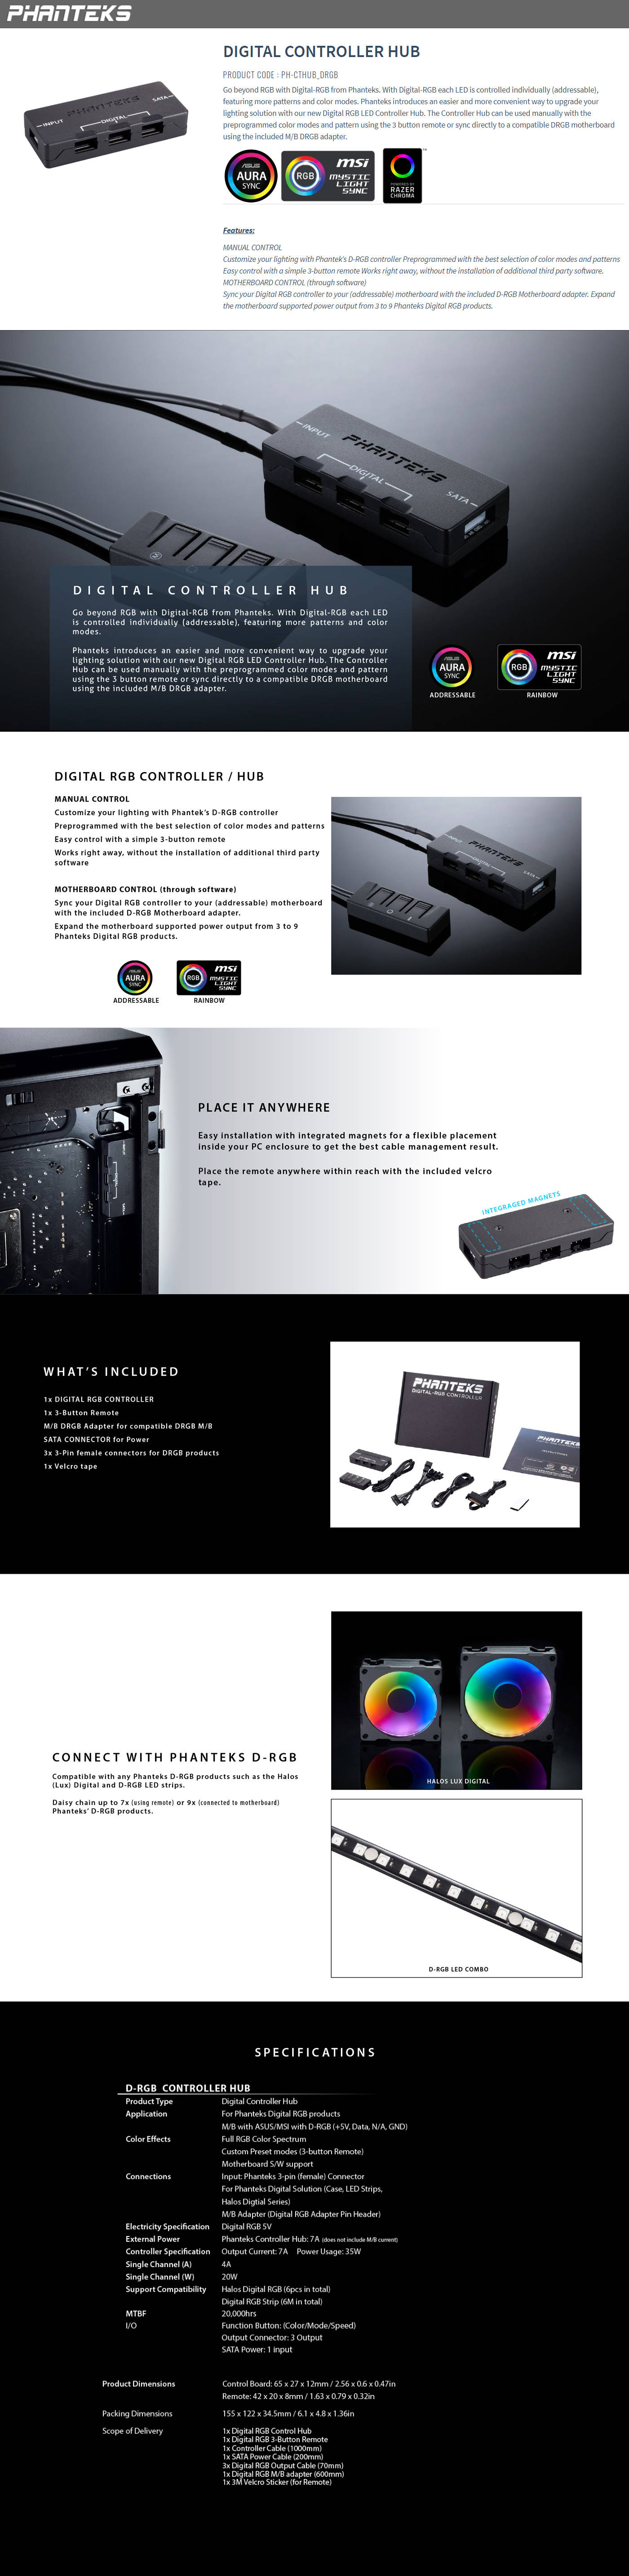 Buy Online Phanteks Digital Controller HUB (PH-CTHUB-DRGB)